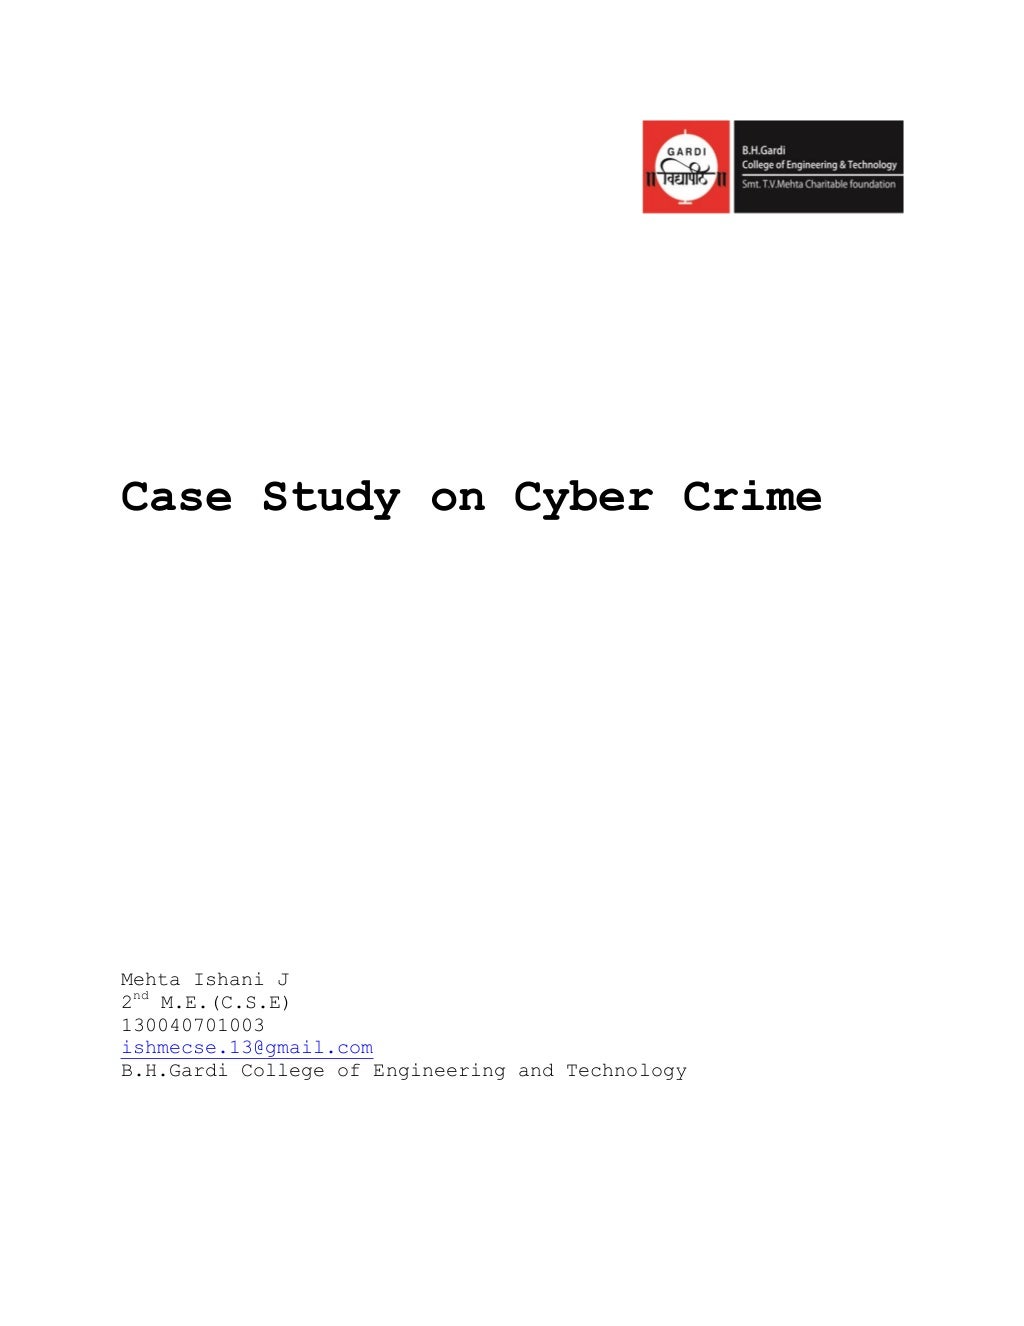 case study on cybercrime